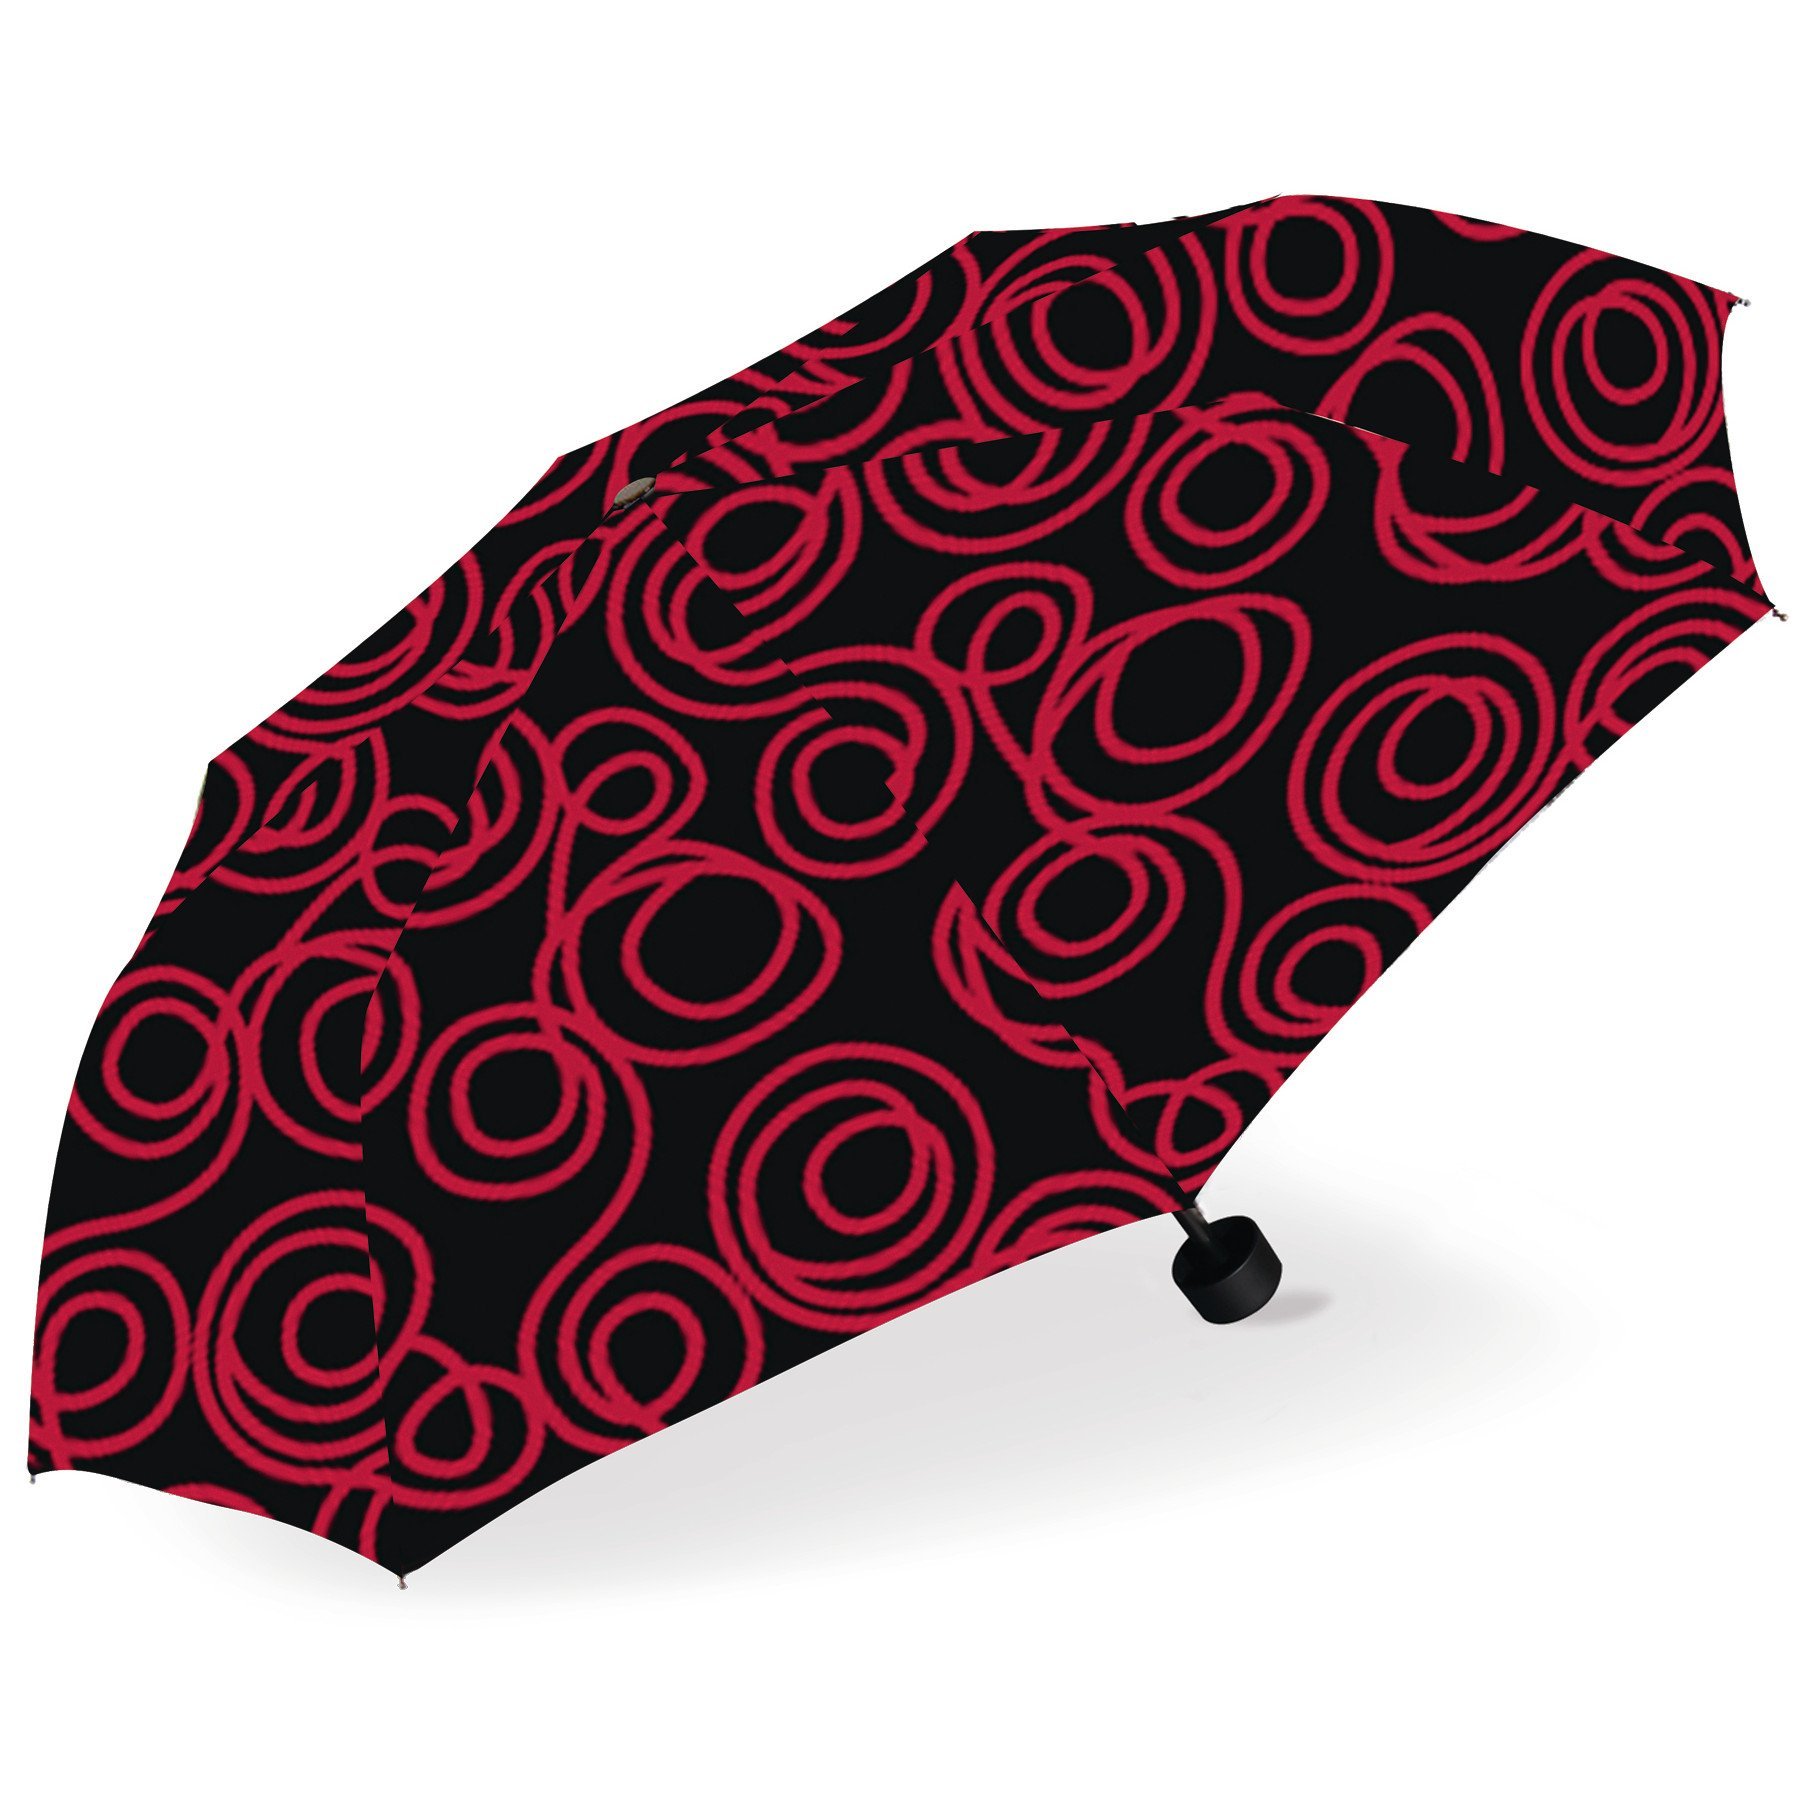 Paraguas Plegable Mini Devota & Lomba diseño Swirl Dance- Rojo - Paraguas Devota & Lomba, Paraguas Originales, Paraguas Mujer, Paraguas plegables originales - Que puedo